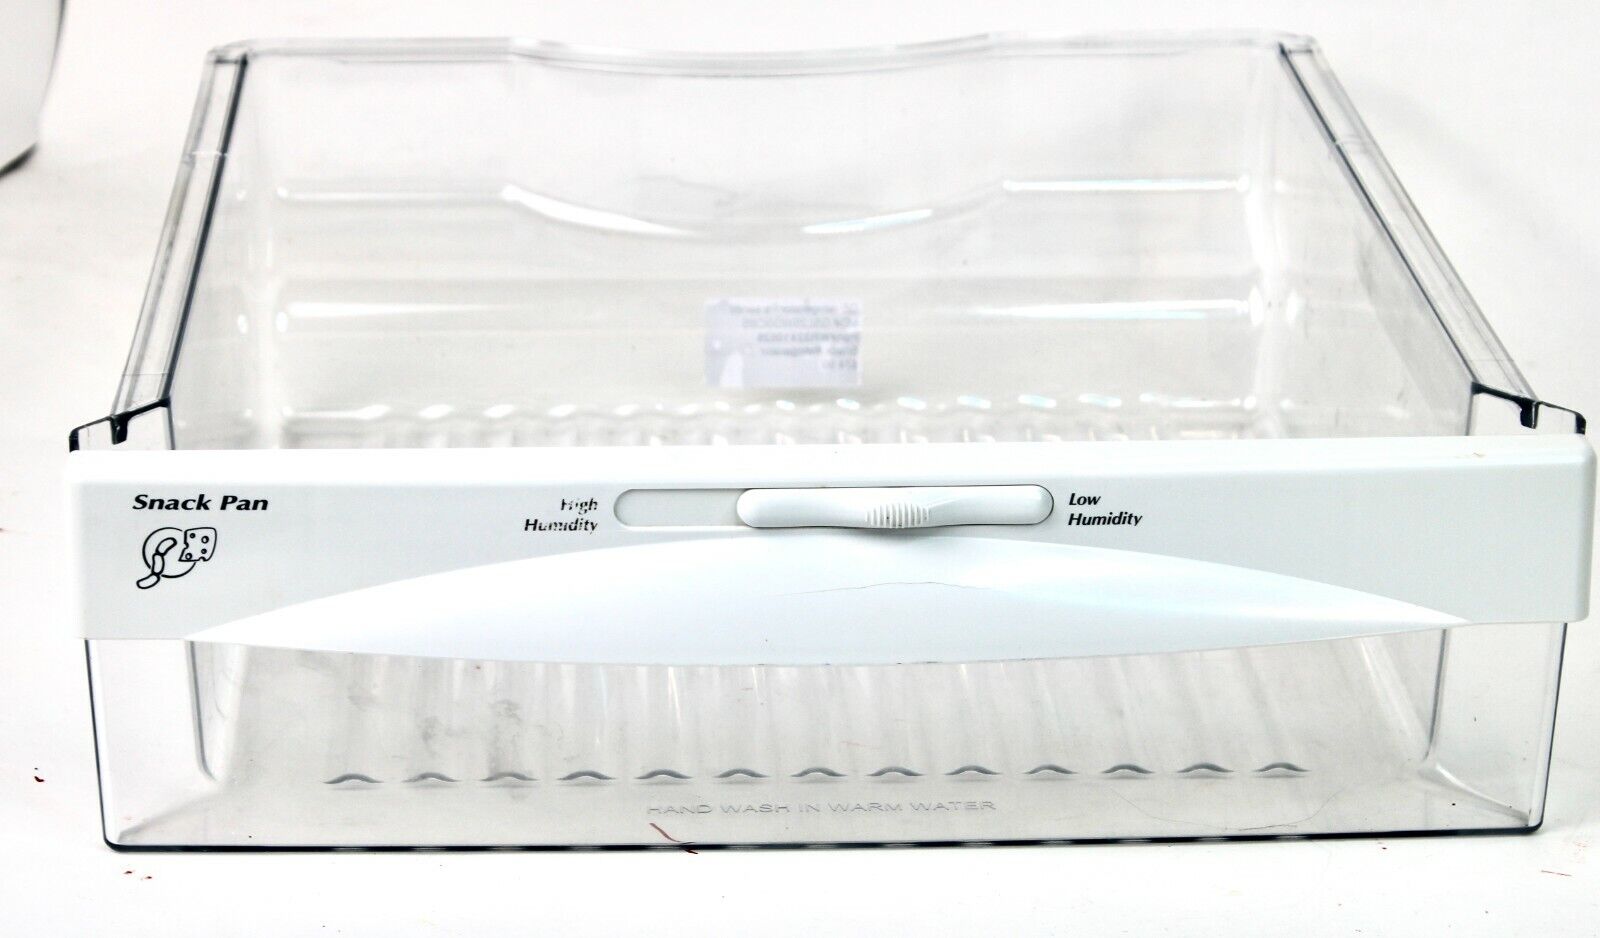 GE-Refrigerator-Snack Drawer-WR32X10526